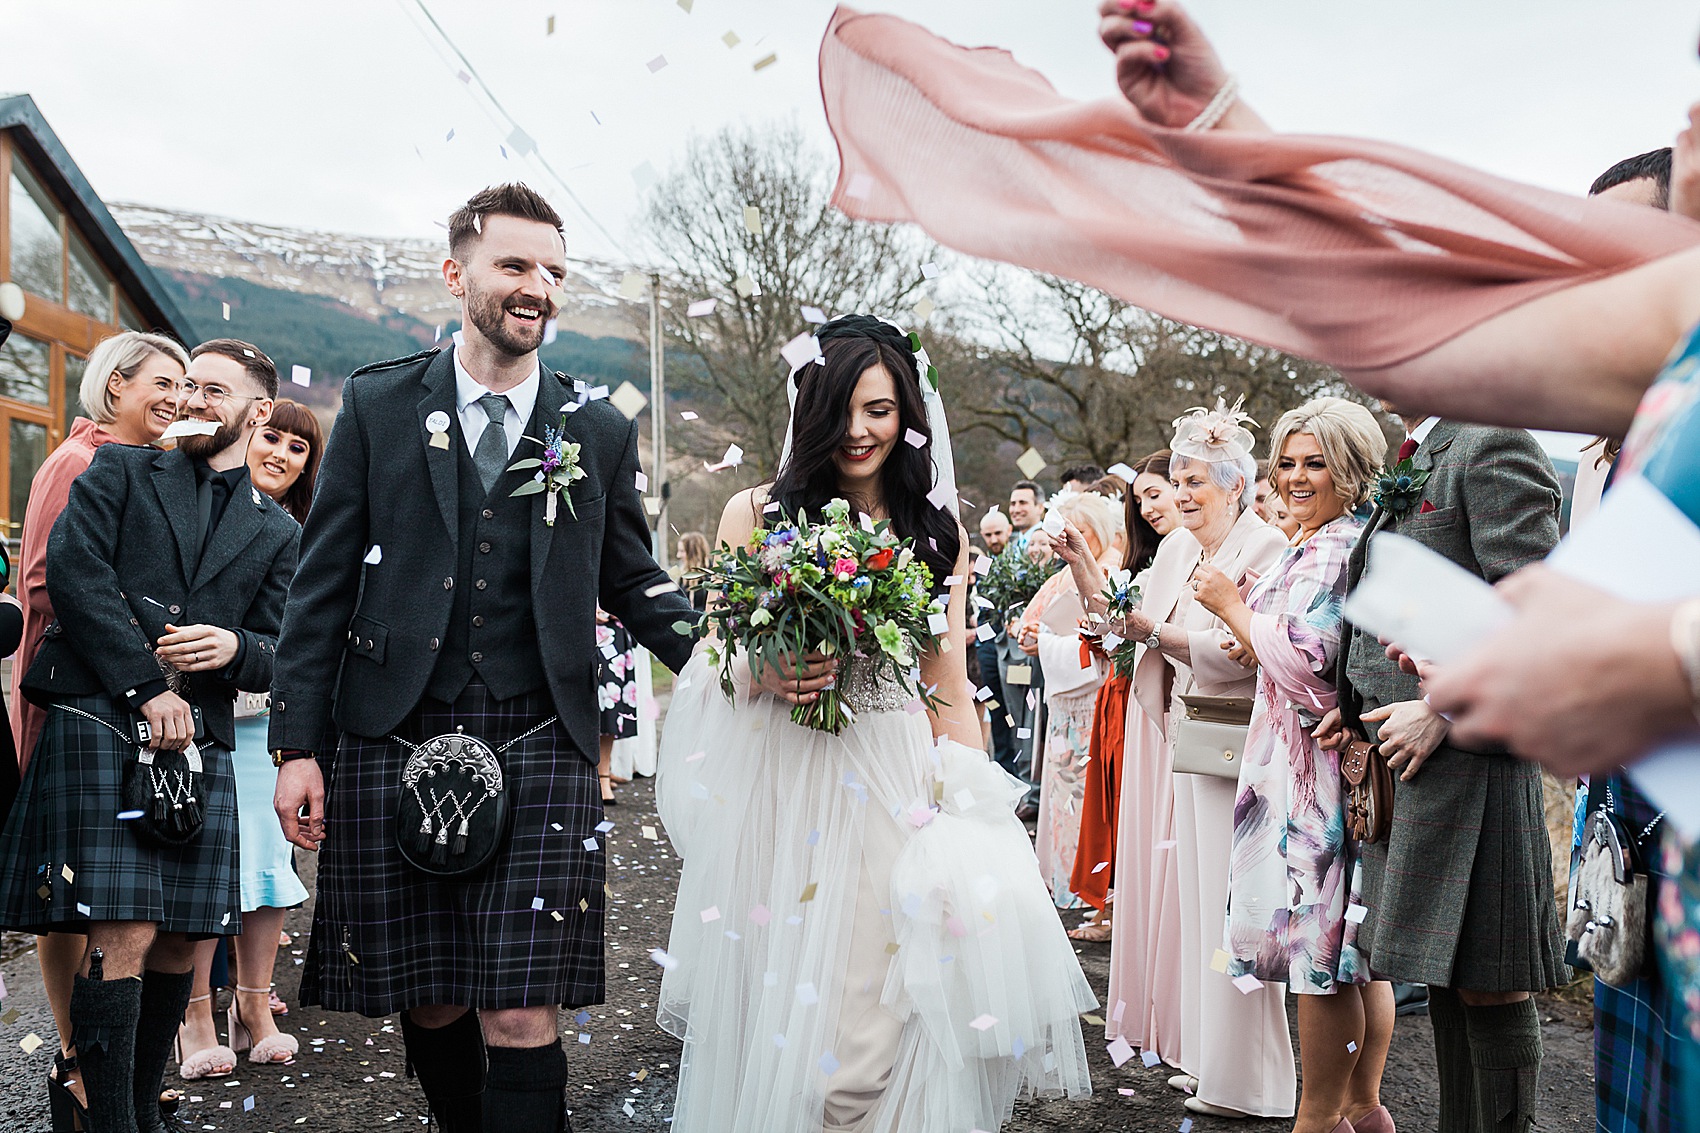 Sottero and Midgley dress whimsical village hall wedding Scotland  - A Humanist, Village Hall, Whimsical Wedding in Scotland with Fresh Oysters + Sottero & Midgley Bride